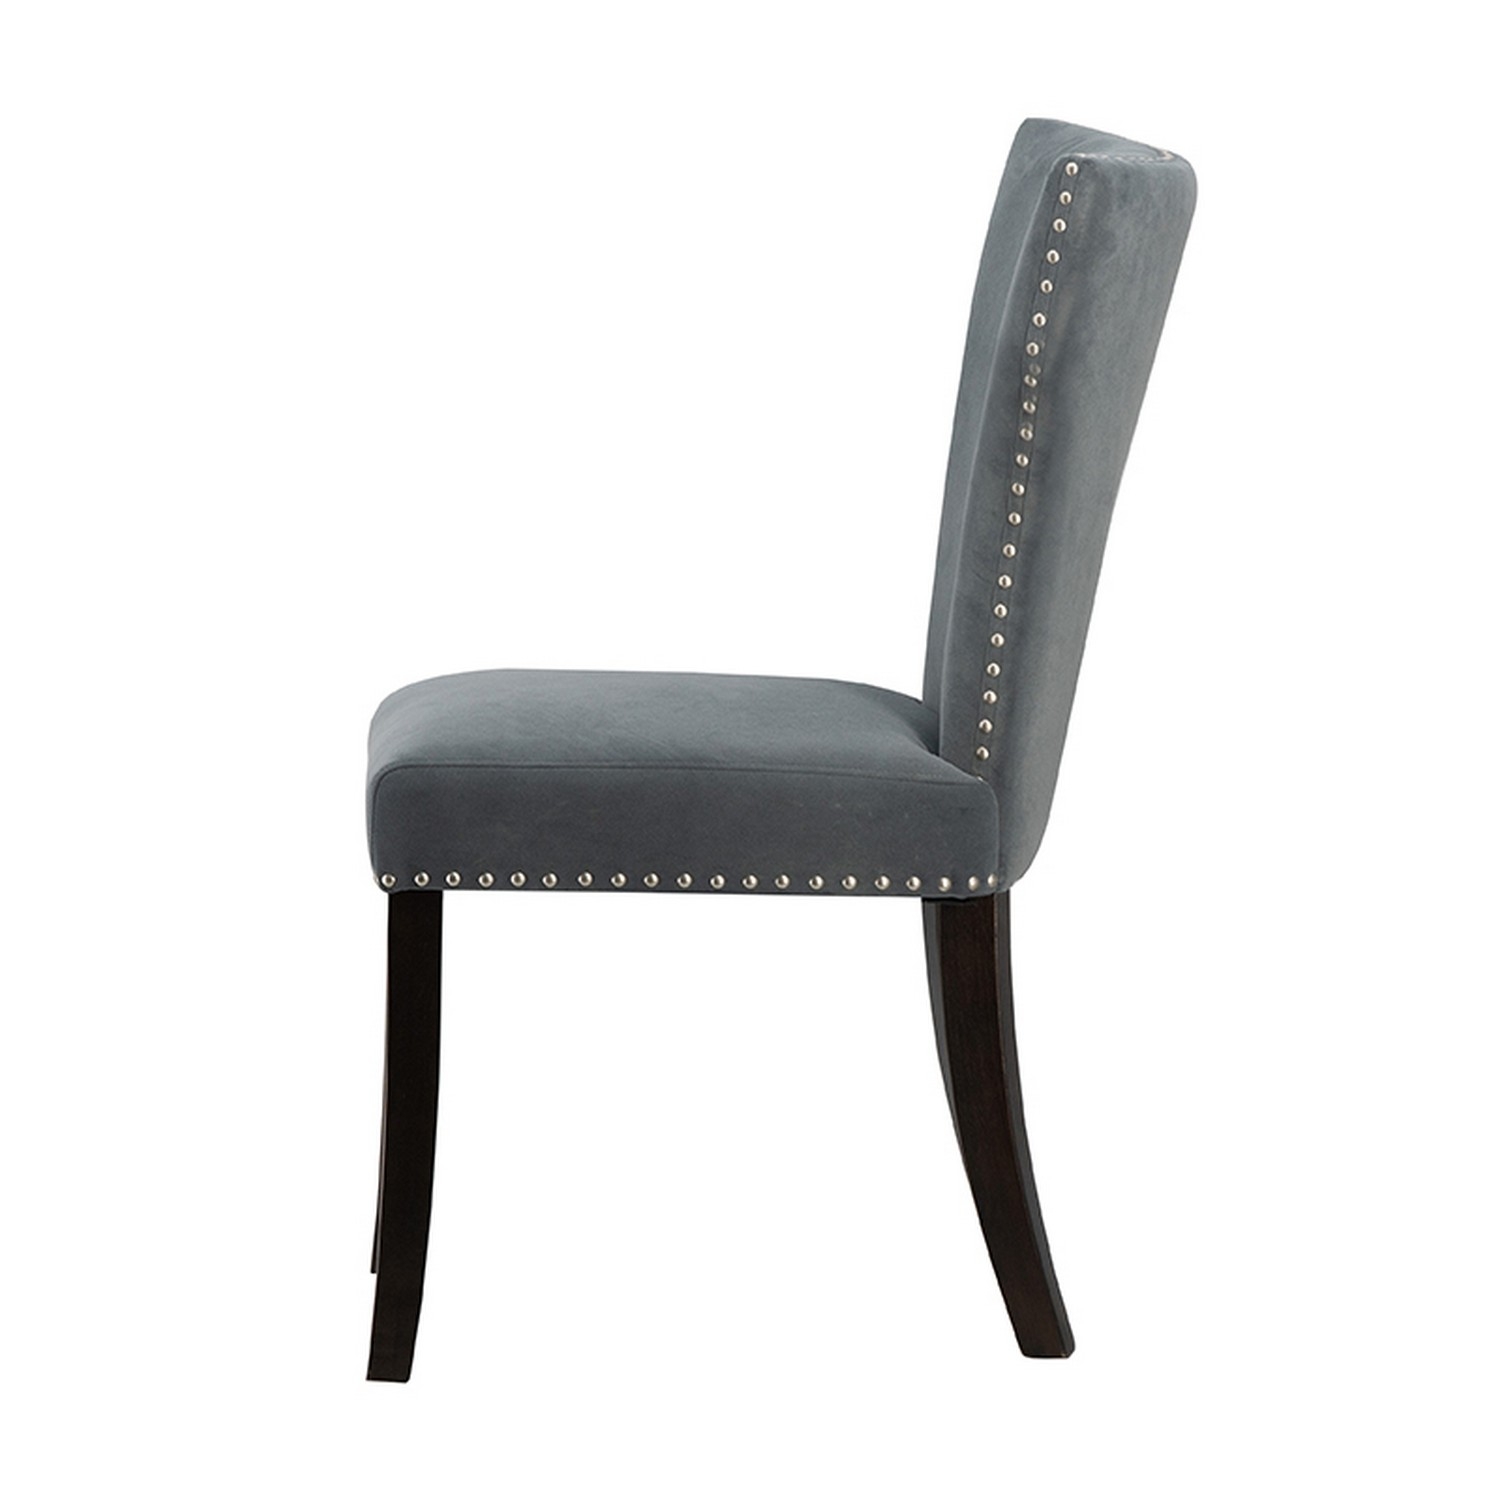 Devi 25 Inch Curved Dining Chair, Gray Velvet Upholstery, Nailhead Trim- Saltoro Sherpi